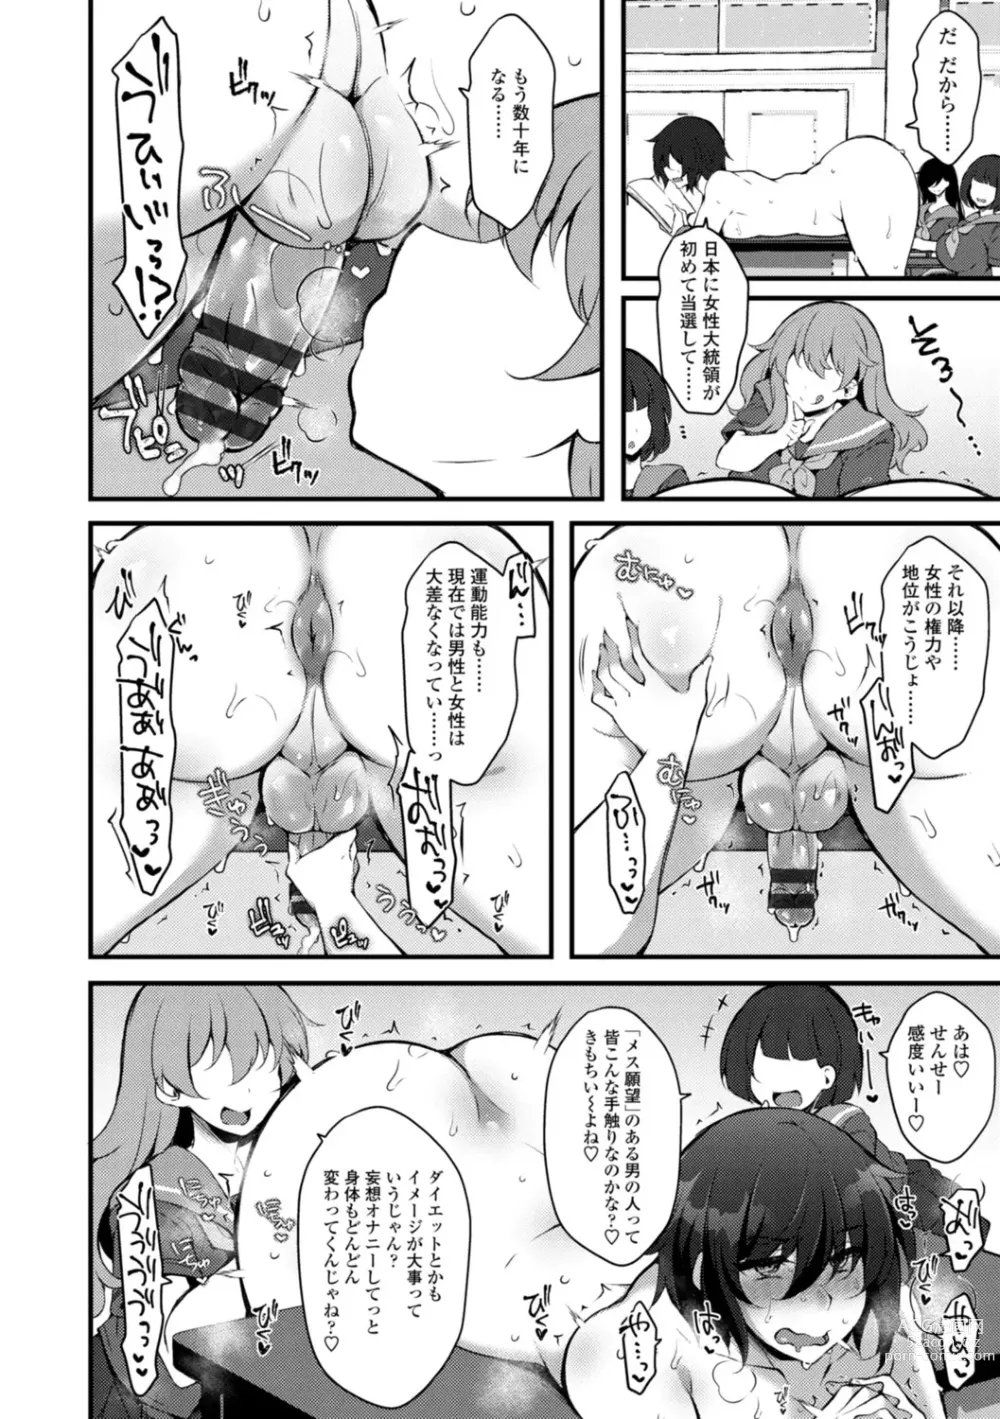 Page 4 of manga Onnanoko-sama no Iu Toori